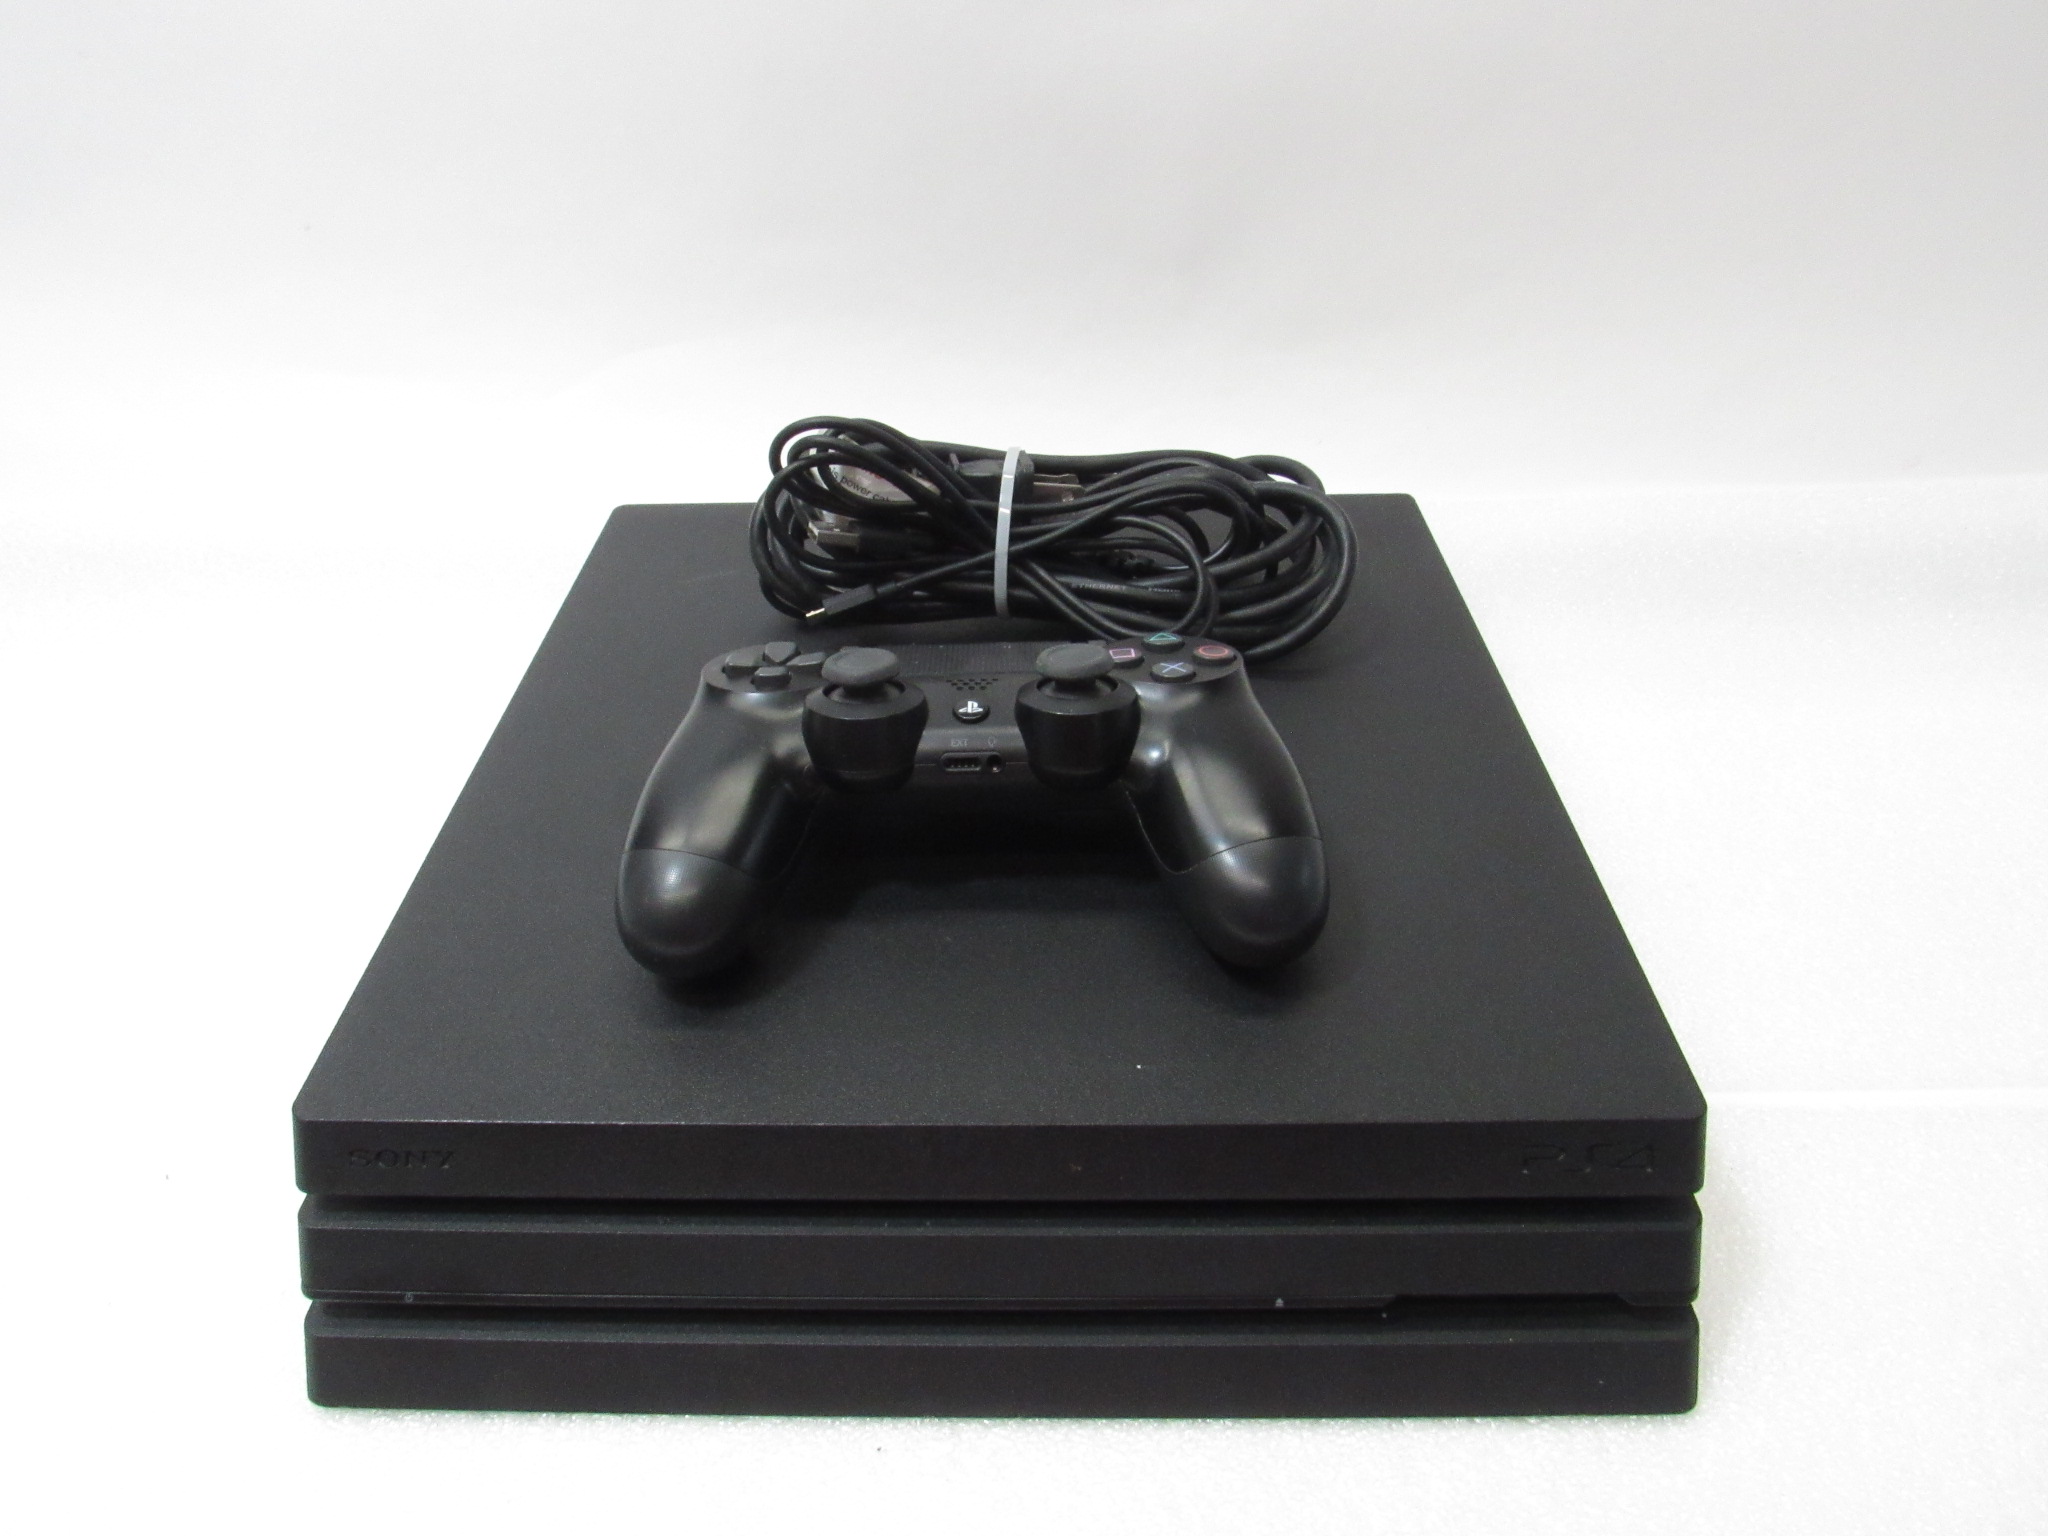 Sony CUH-7215B PlayStation 4 PS4 Pro 1TB Console Black